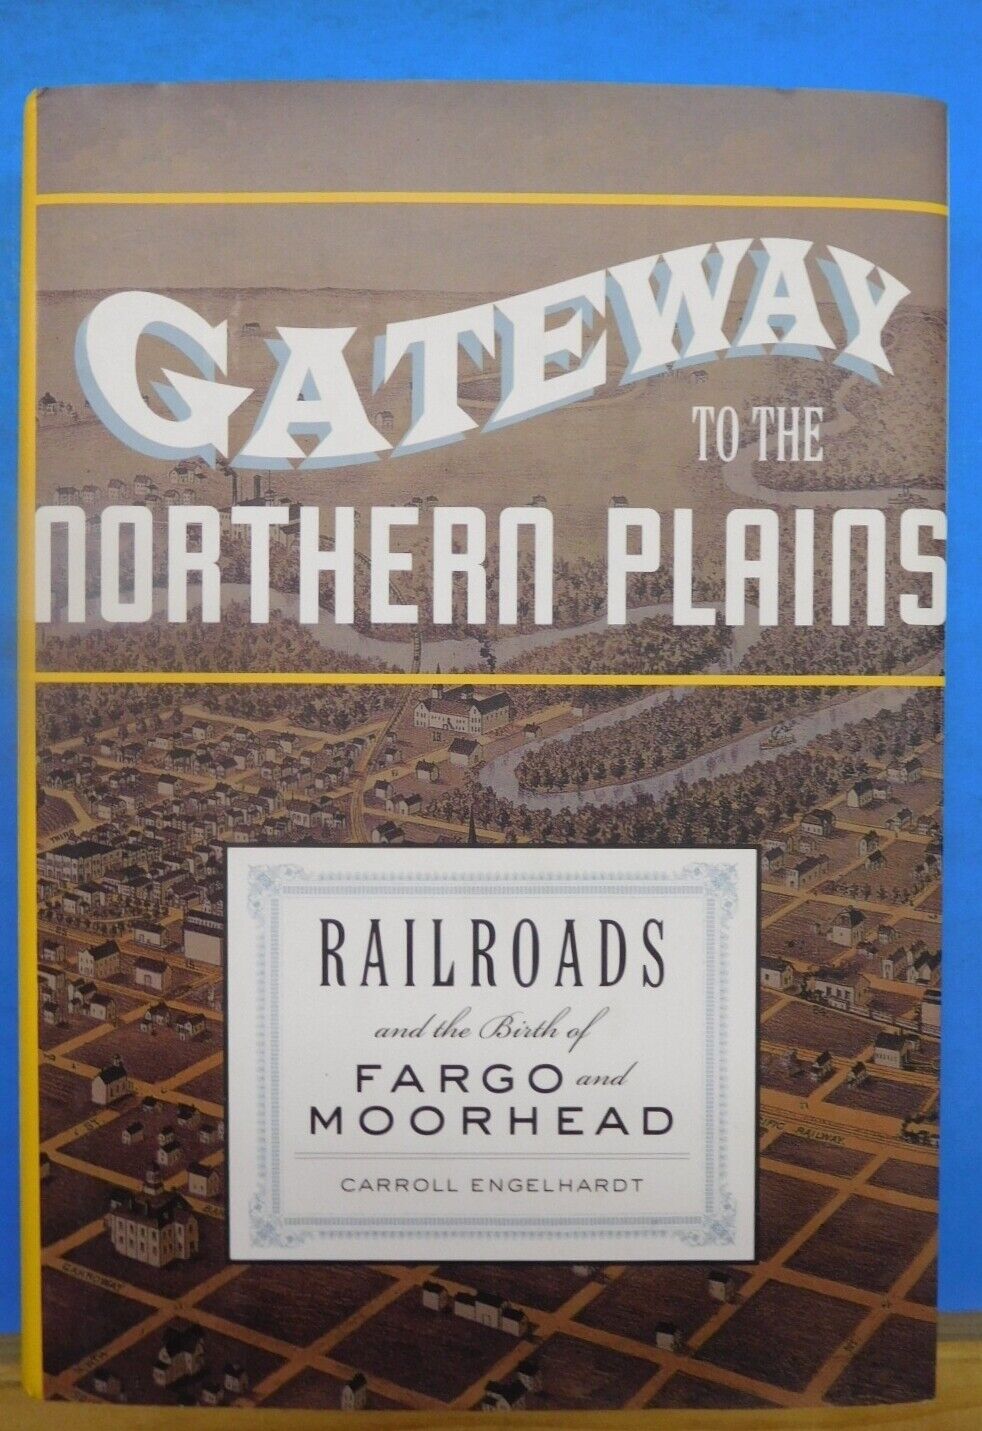 Gateway to the Northern Plains by Carroll Engelhardt  Railroads Fargo Moorhead